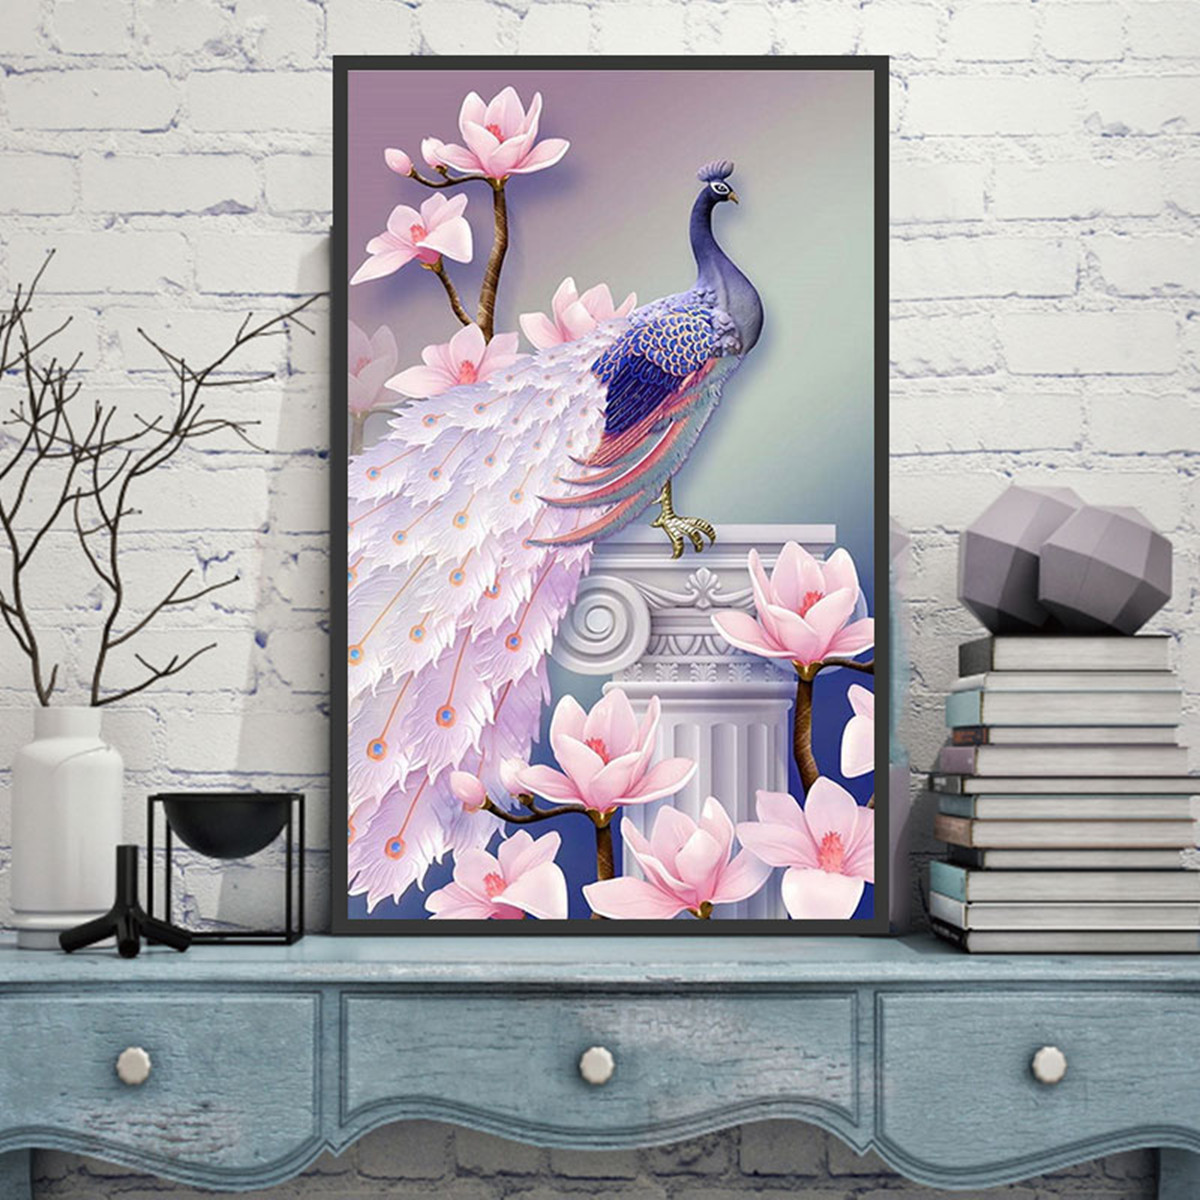 DIY-5D-Diamond-Painting-Magnolia-Peacock-Art-Craft-Embroidery-Stitch-Kit-Handmade-Wall-Decorations-G-1285865-8